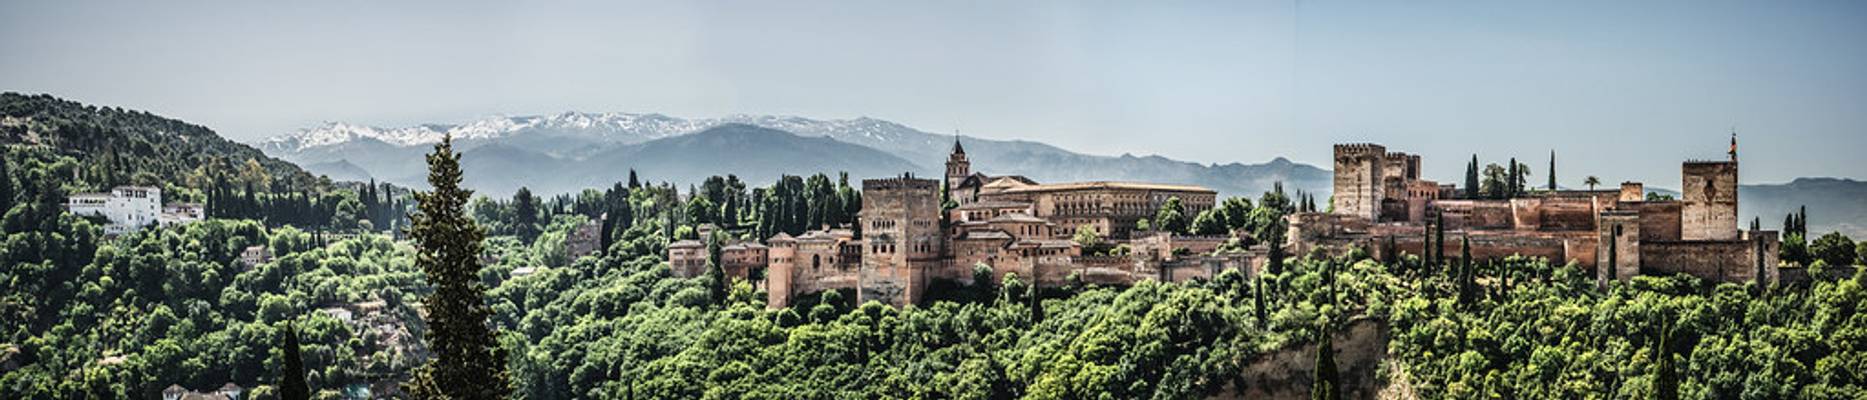 Panorámica clásica de la Alhambra de Granada